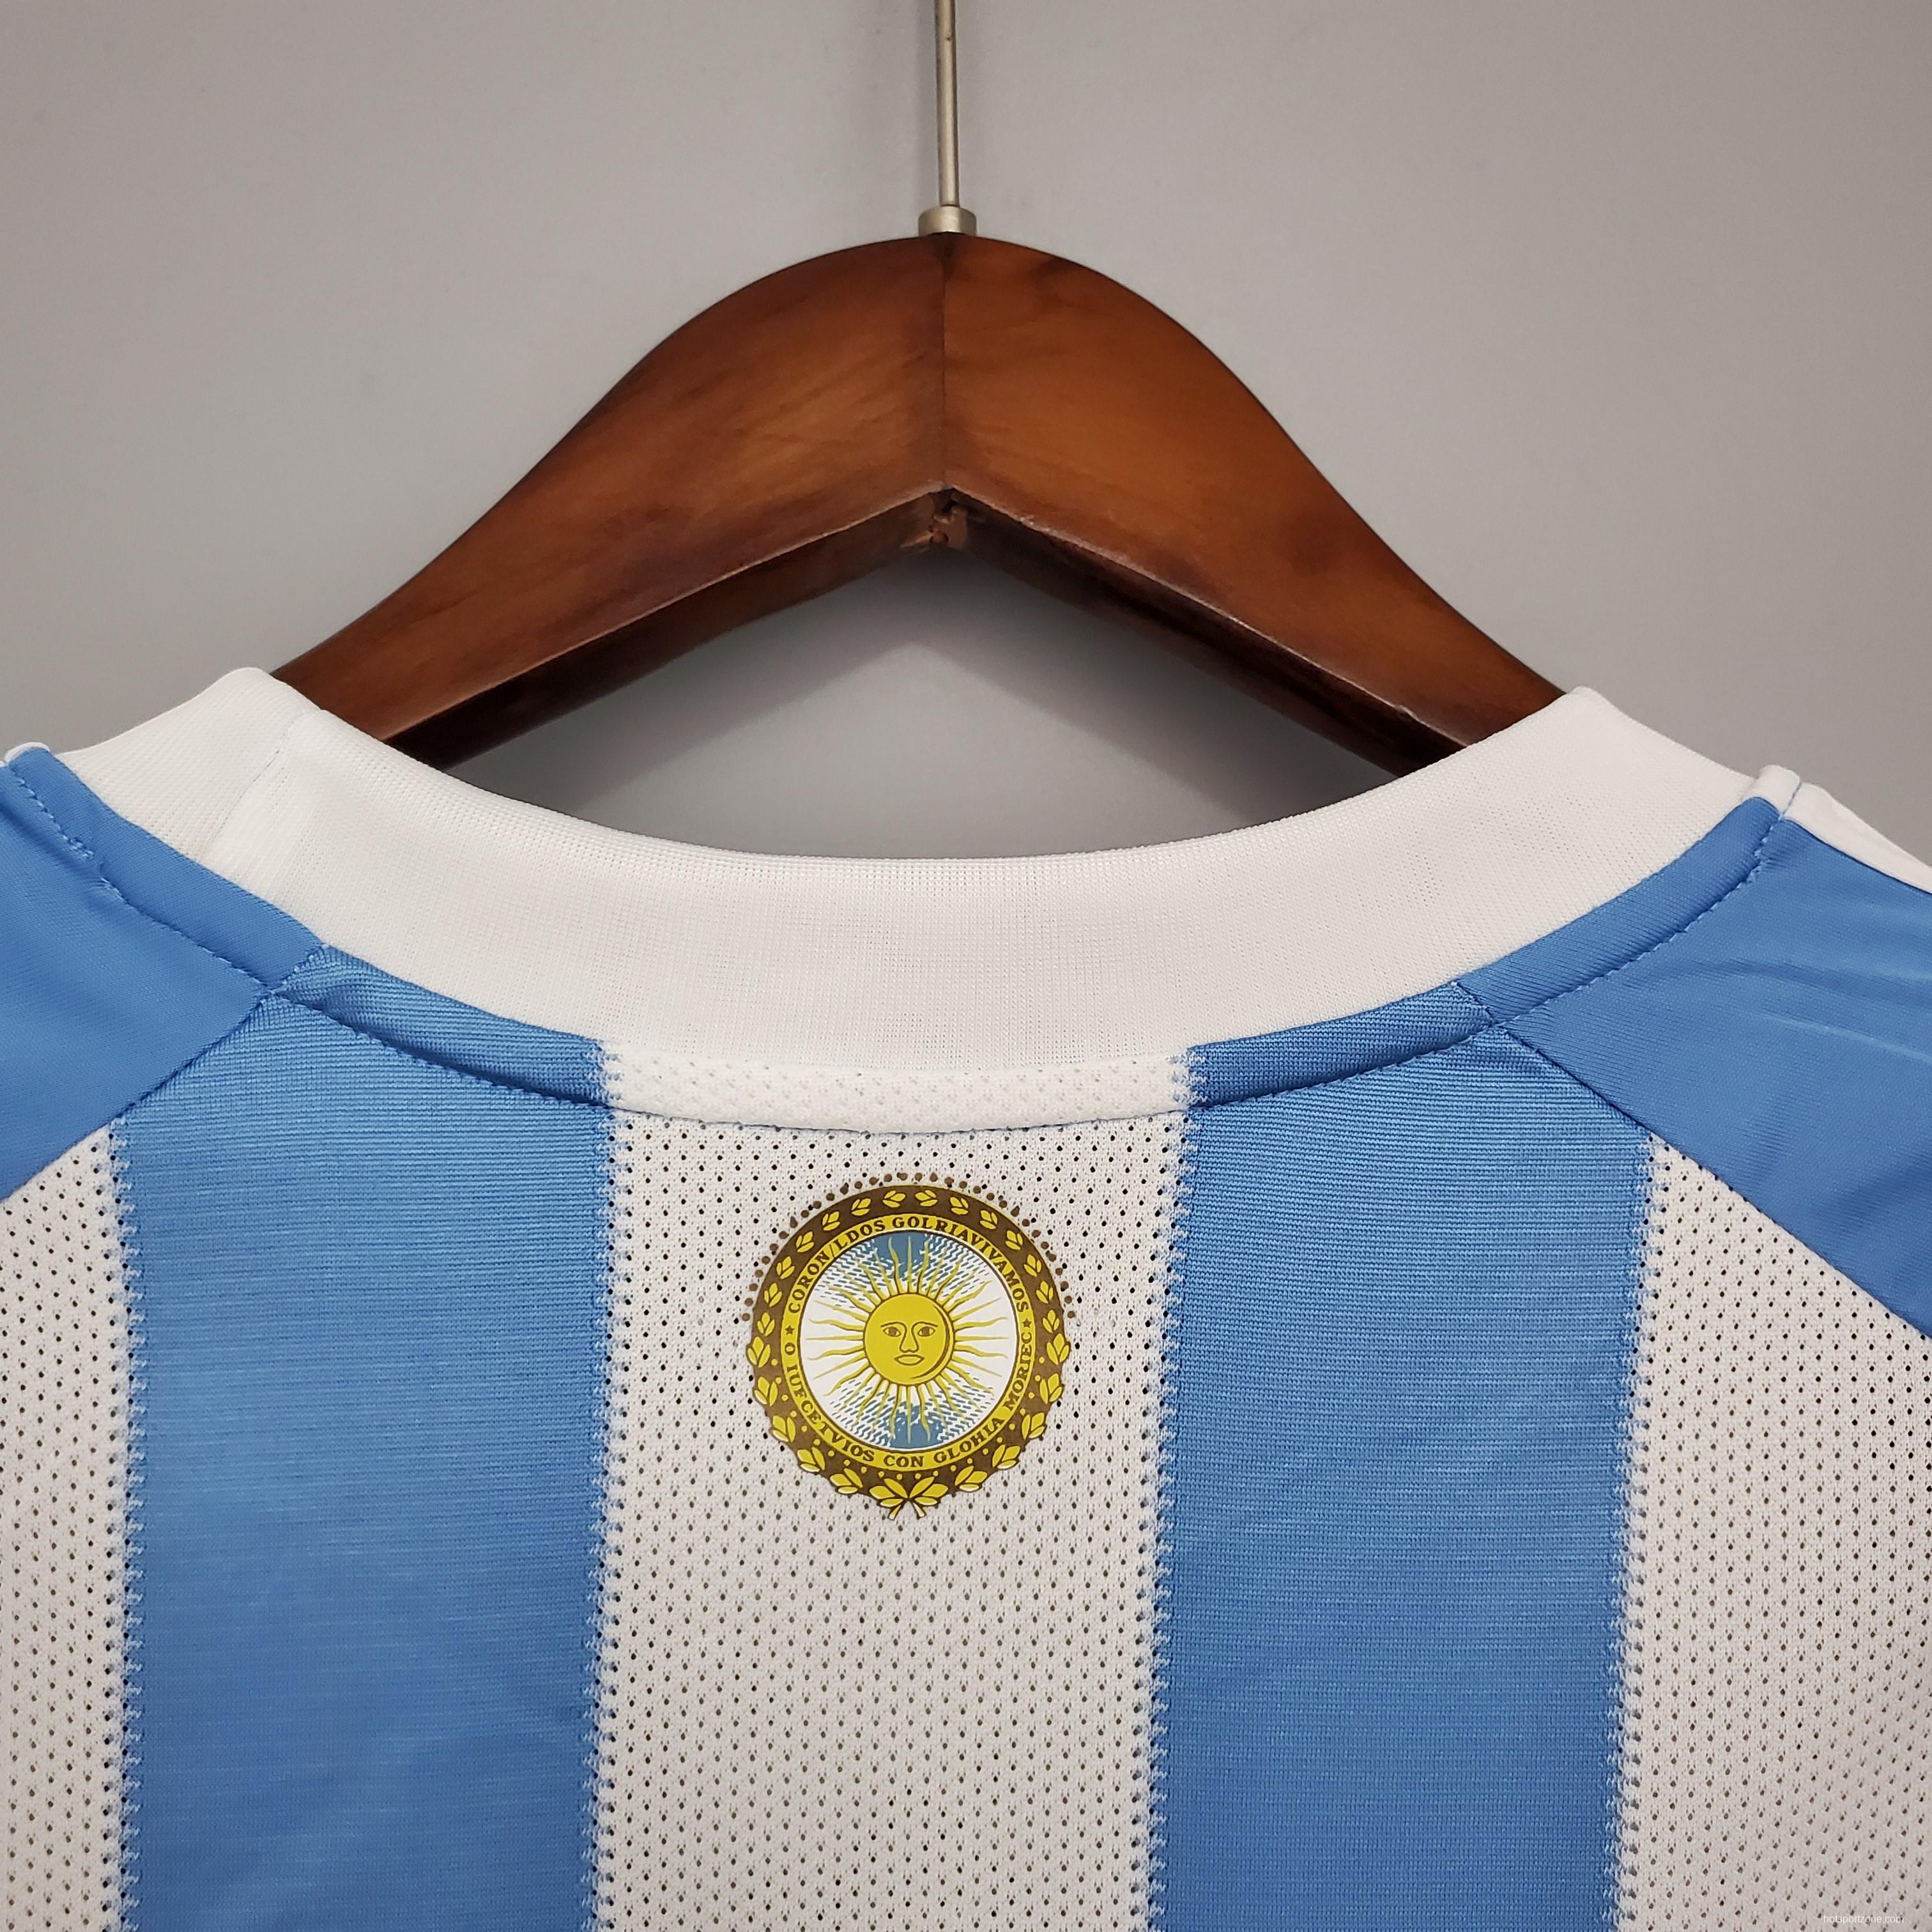 Retro 2010 Argentina home Soccer Jersey